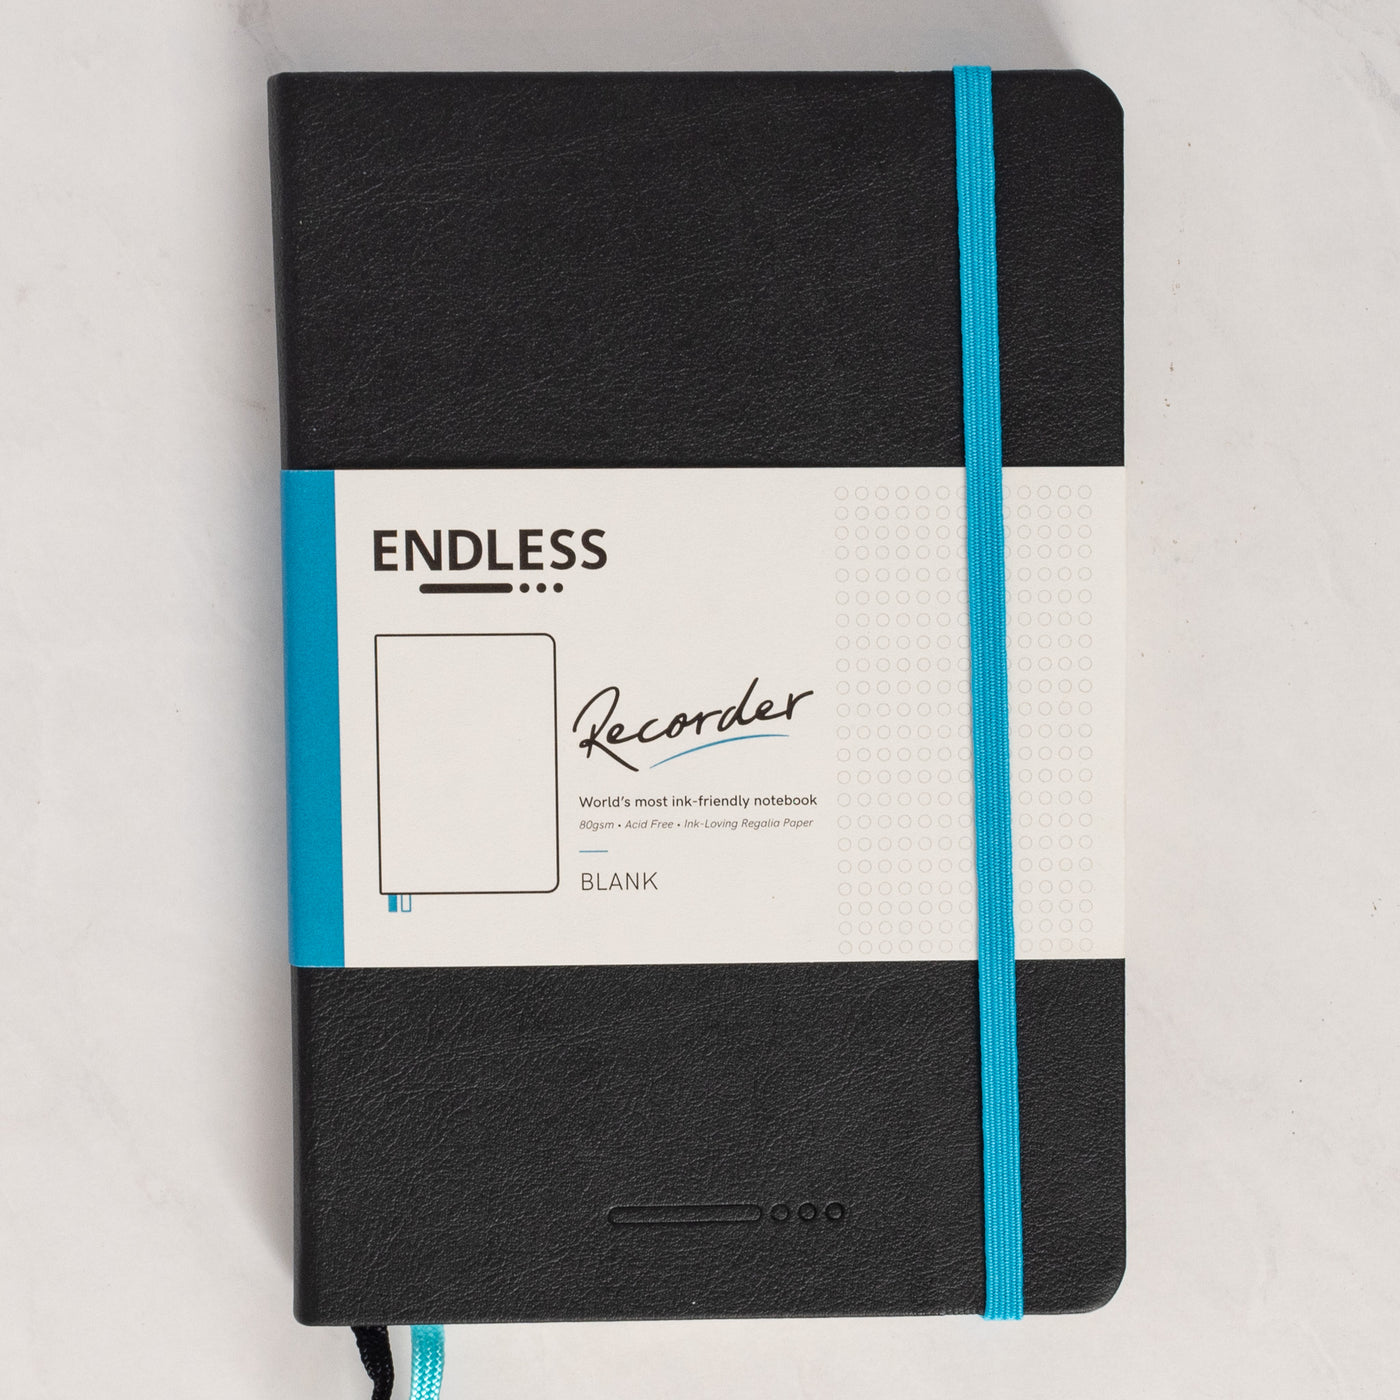 Endless Recorder Infinite Space Black Blank Regalia Notebook cover